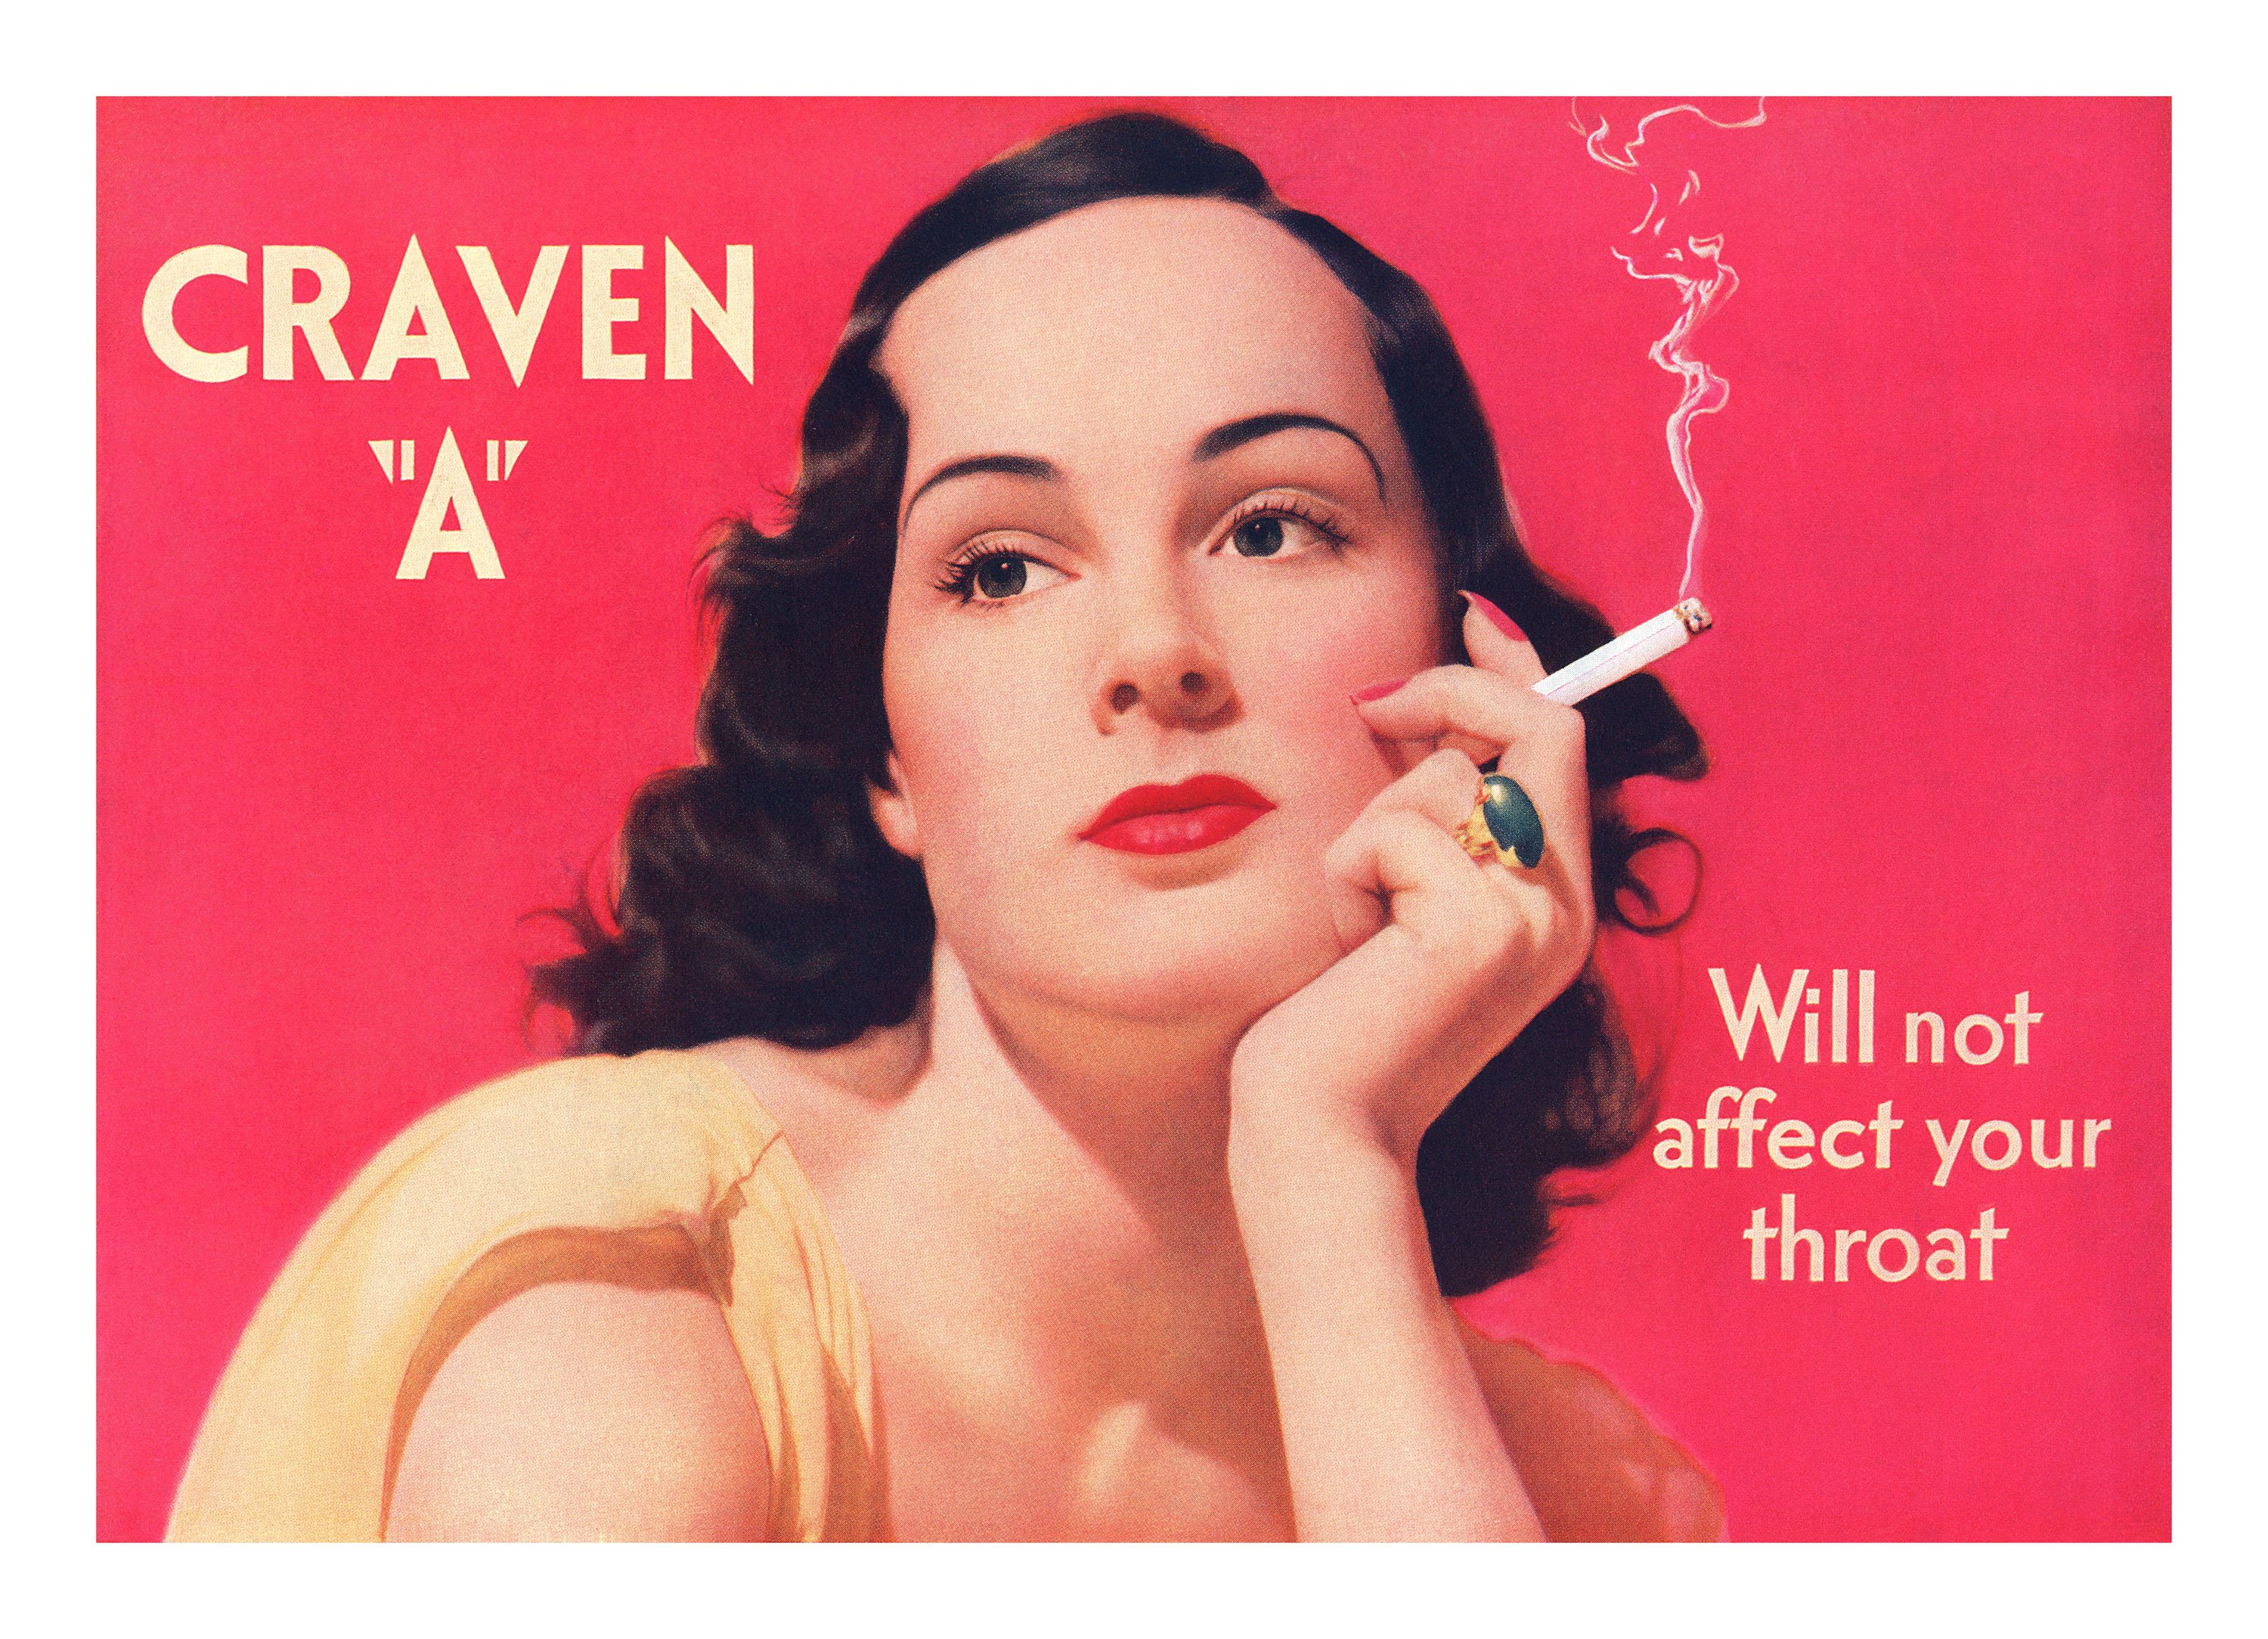 cigarette, Smoke, Smoking, Cigarettes, Tobacco, Cigars, Cigar, Poster Wallpaper